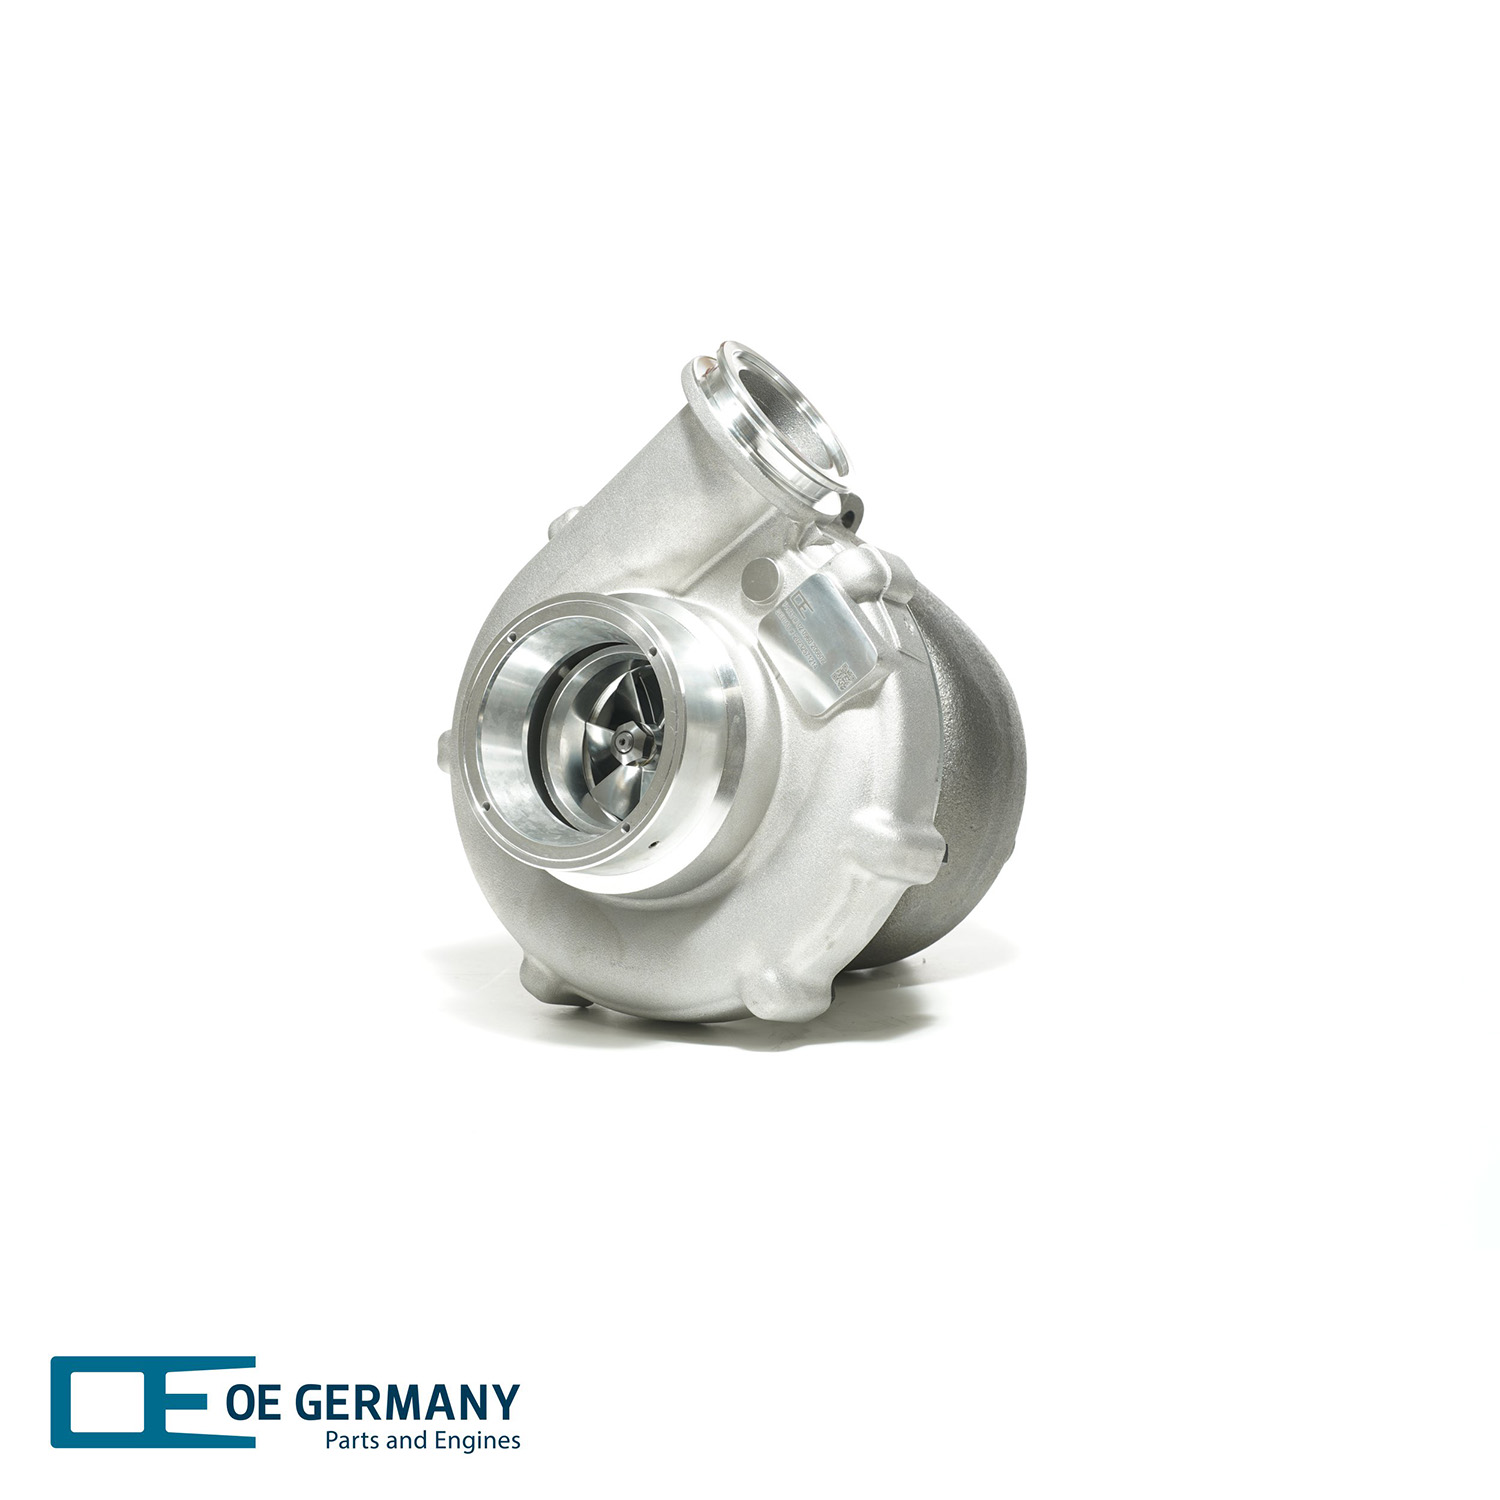 OE Germany Turbolader 02 0960 206602